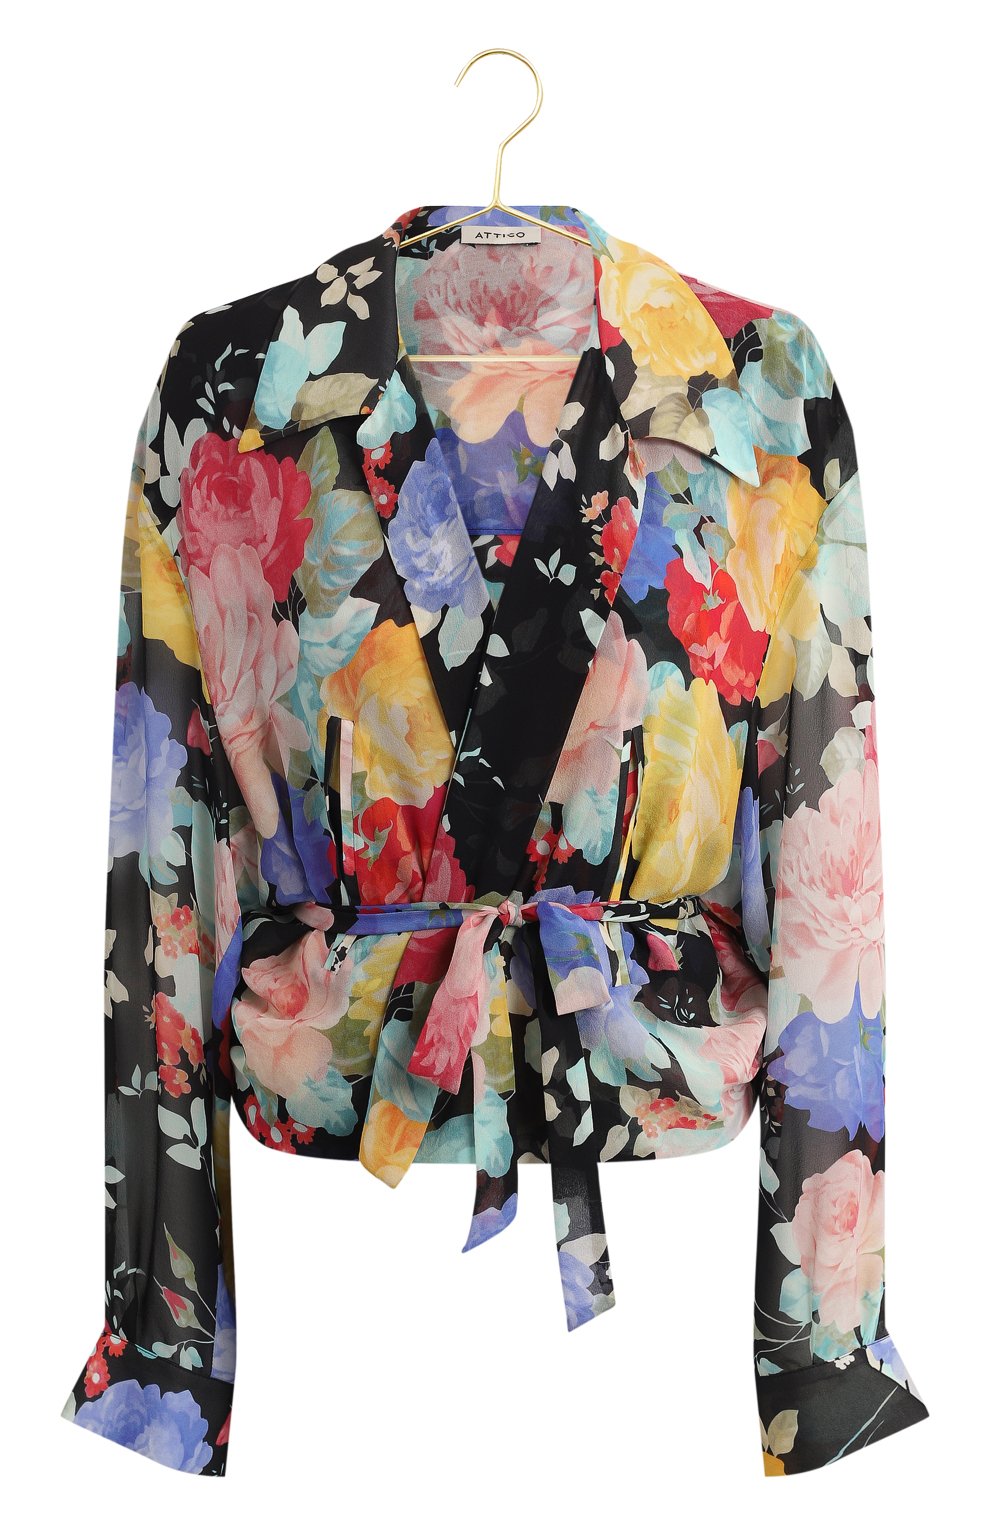 Шелковая блузка | The Attico | Разноцветный - 1